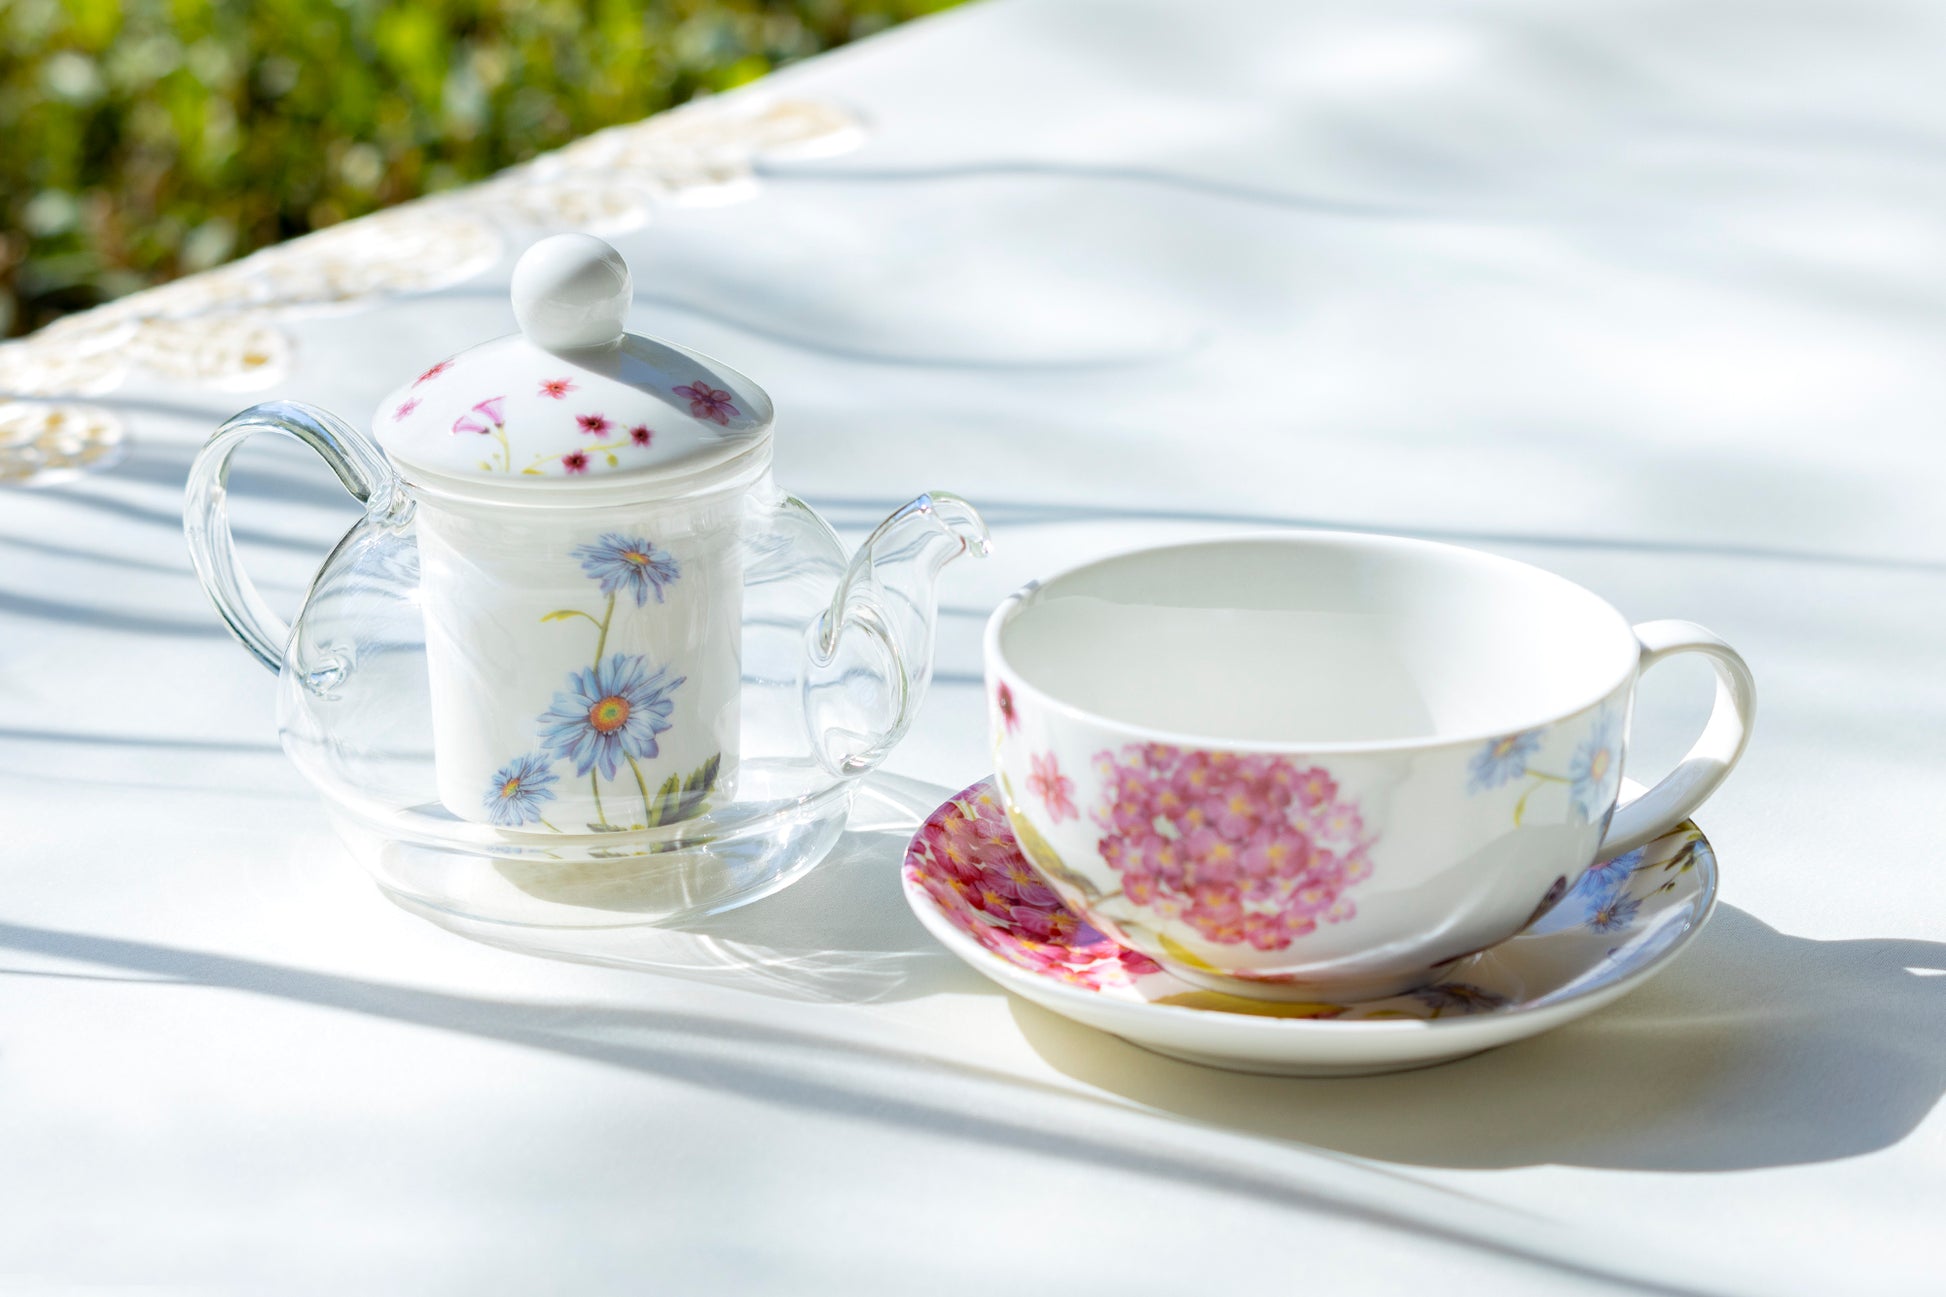 Hydrangea with Butterflies Glass Fine Porcelain Tea For One Set